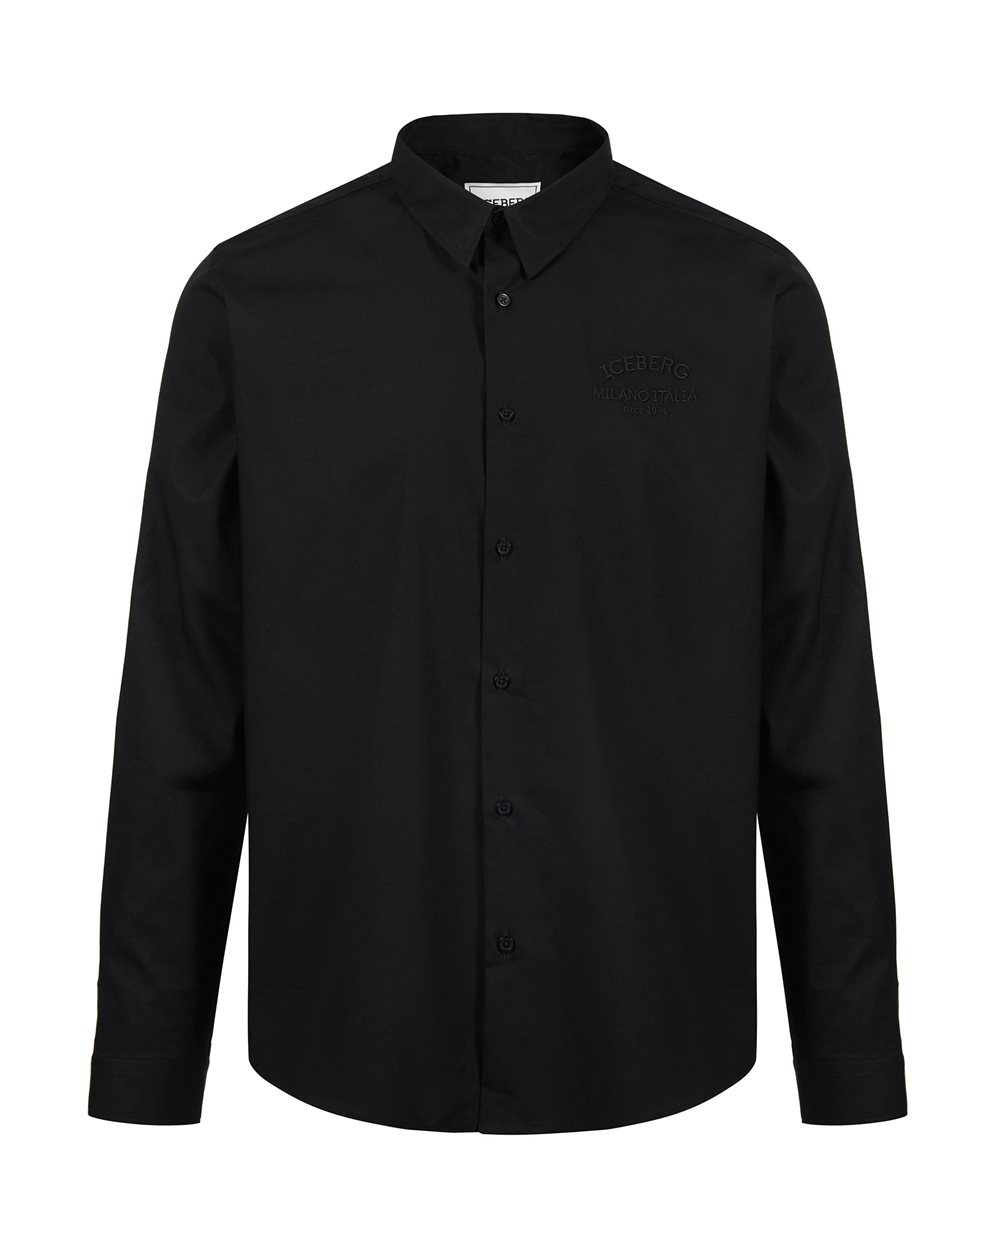 Black shirt with logo - shirts | Iceberg - Official Website